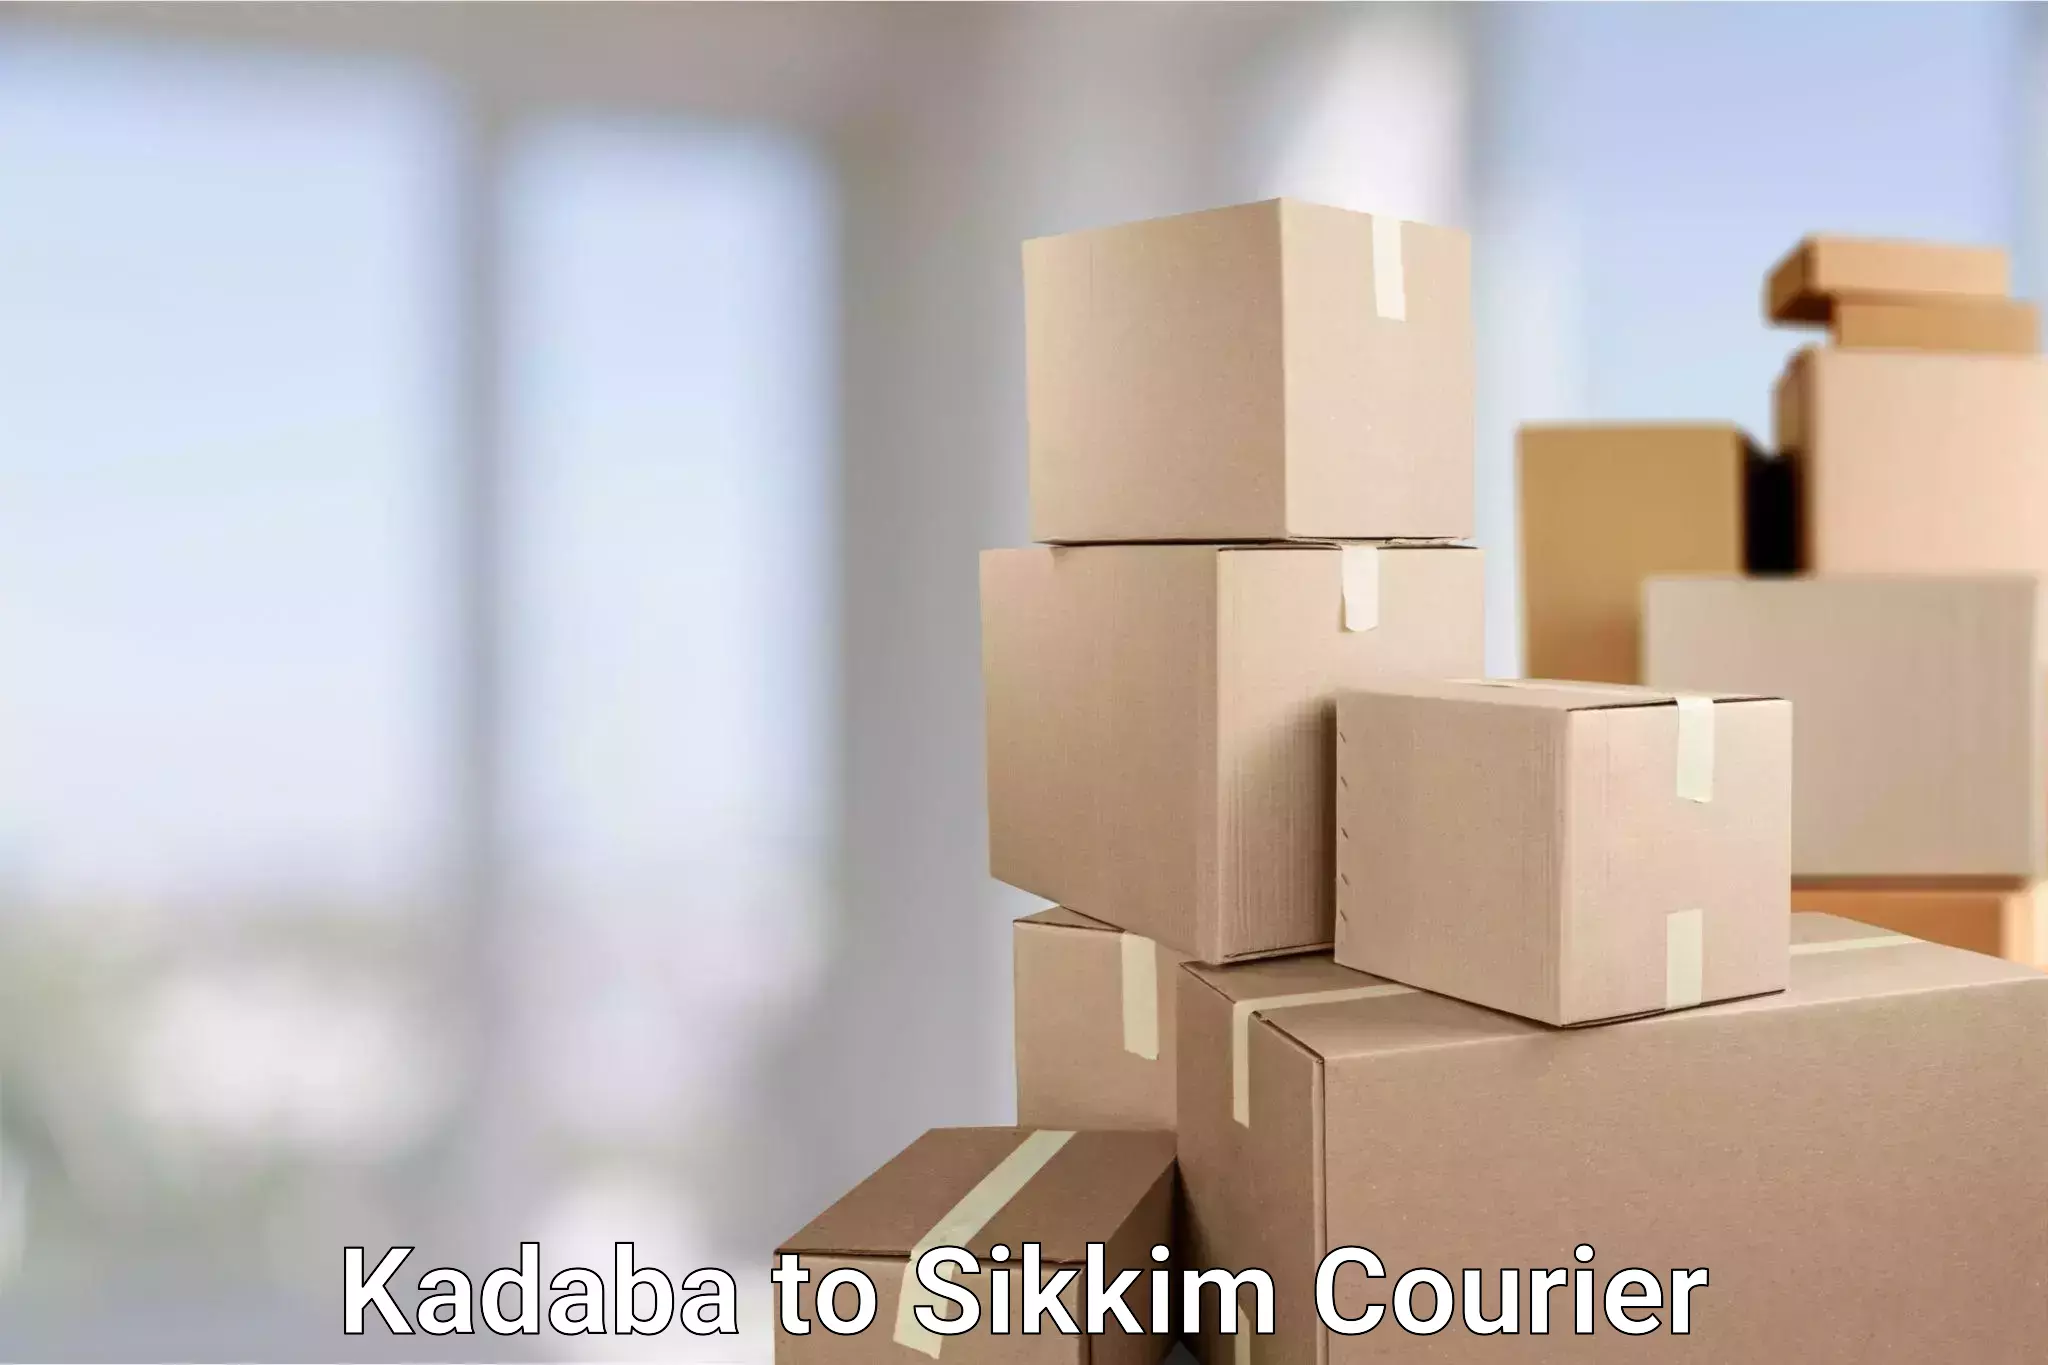 Courier service comparison Kadaba to Pelling